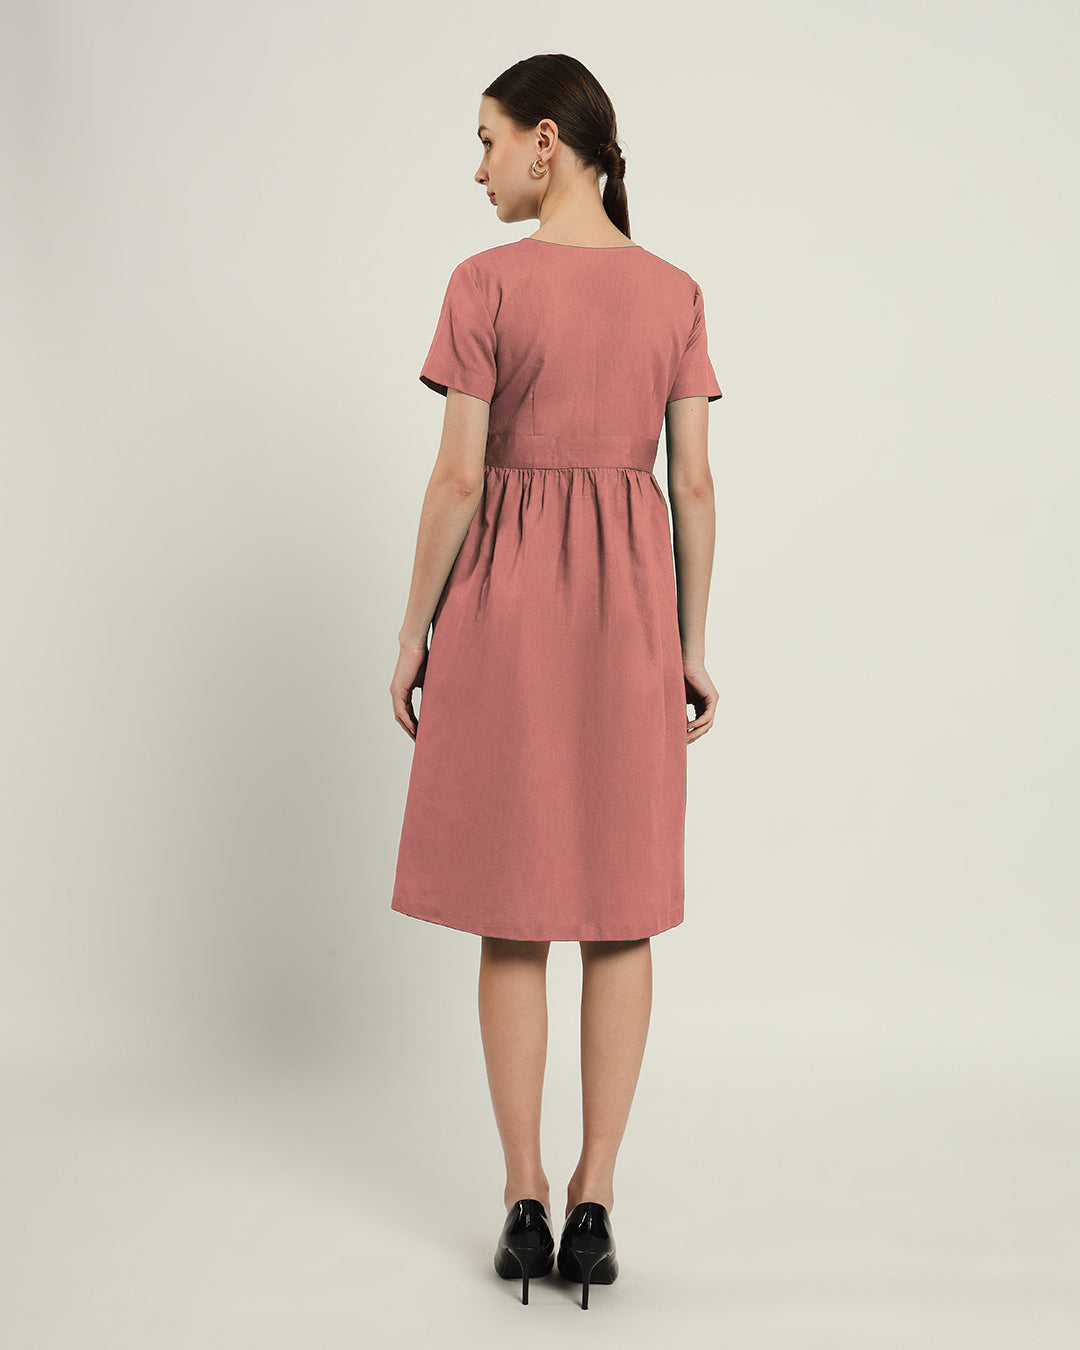 The Miyoshi Ivory Pink Dress